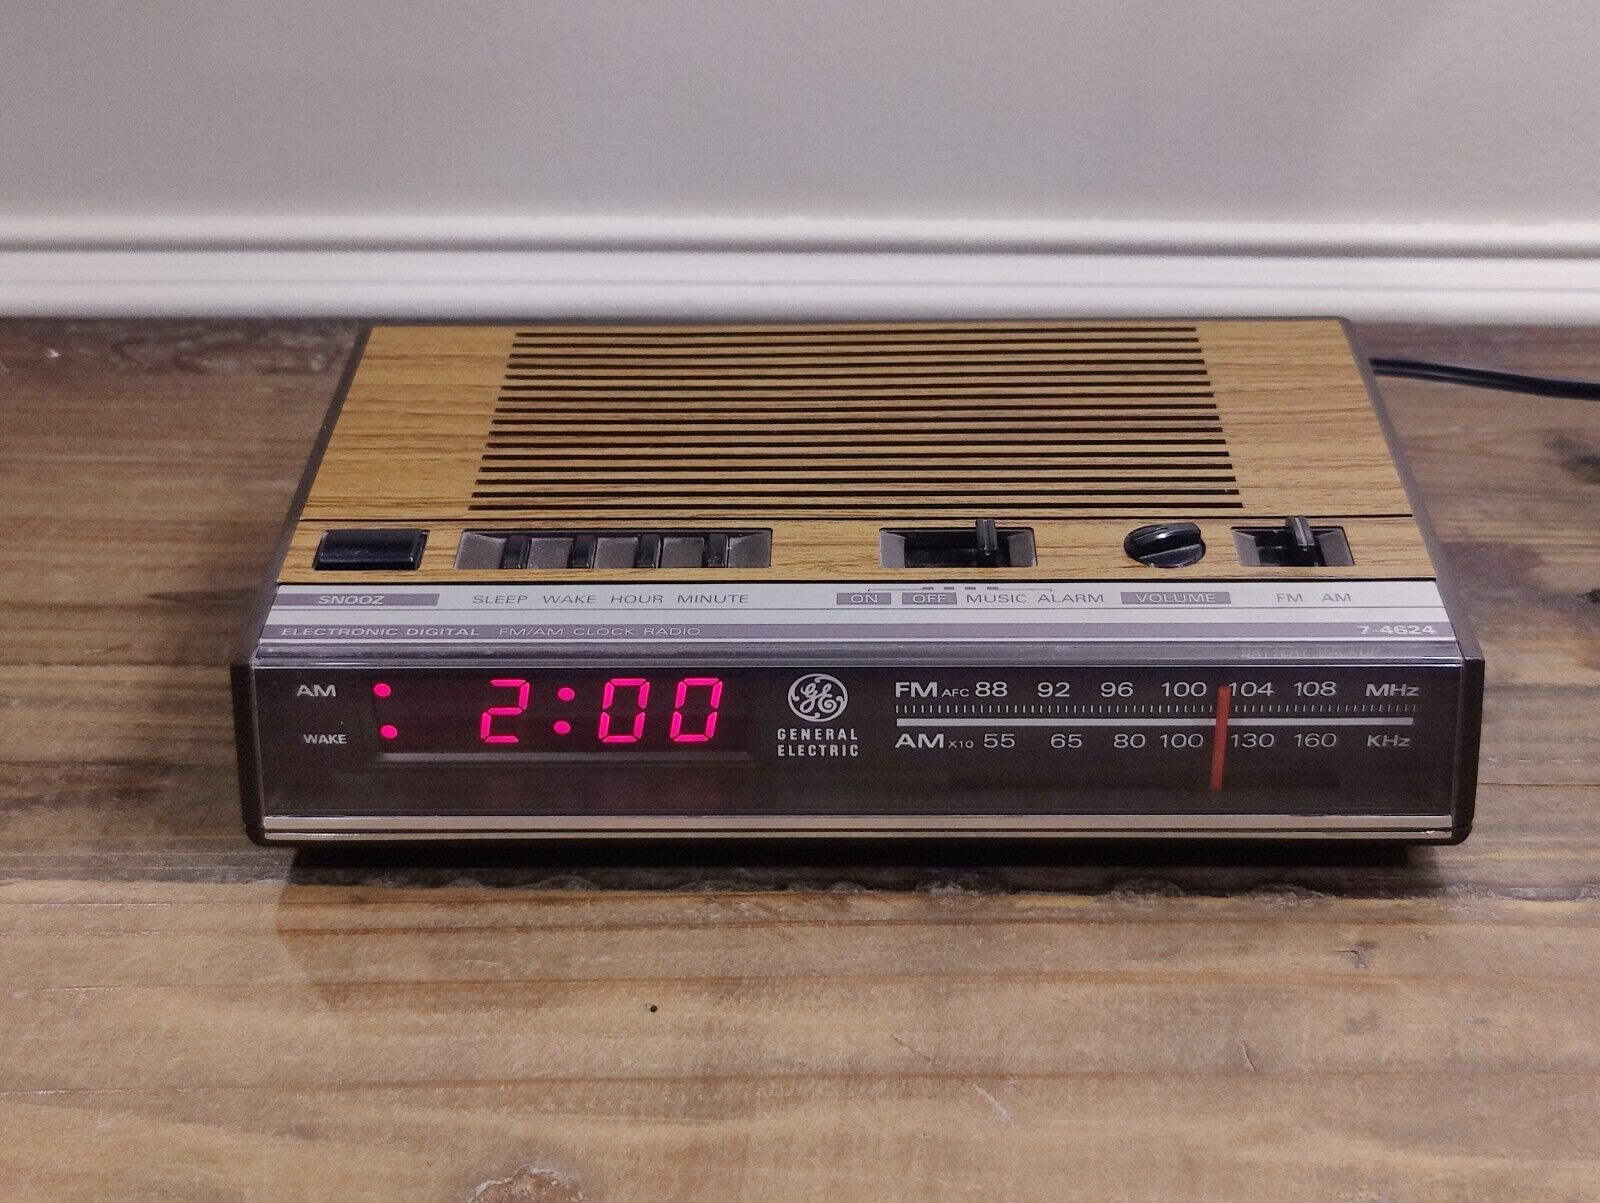 GE 7-4624B Radio Alarm Clock-AM/FM-Vintage 1989-Red Digits-Tested/Works-VG Cond.